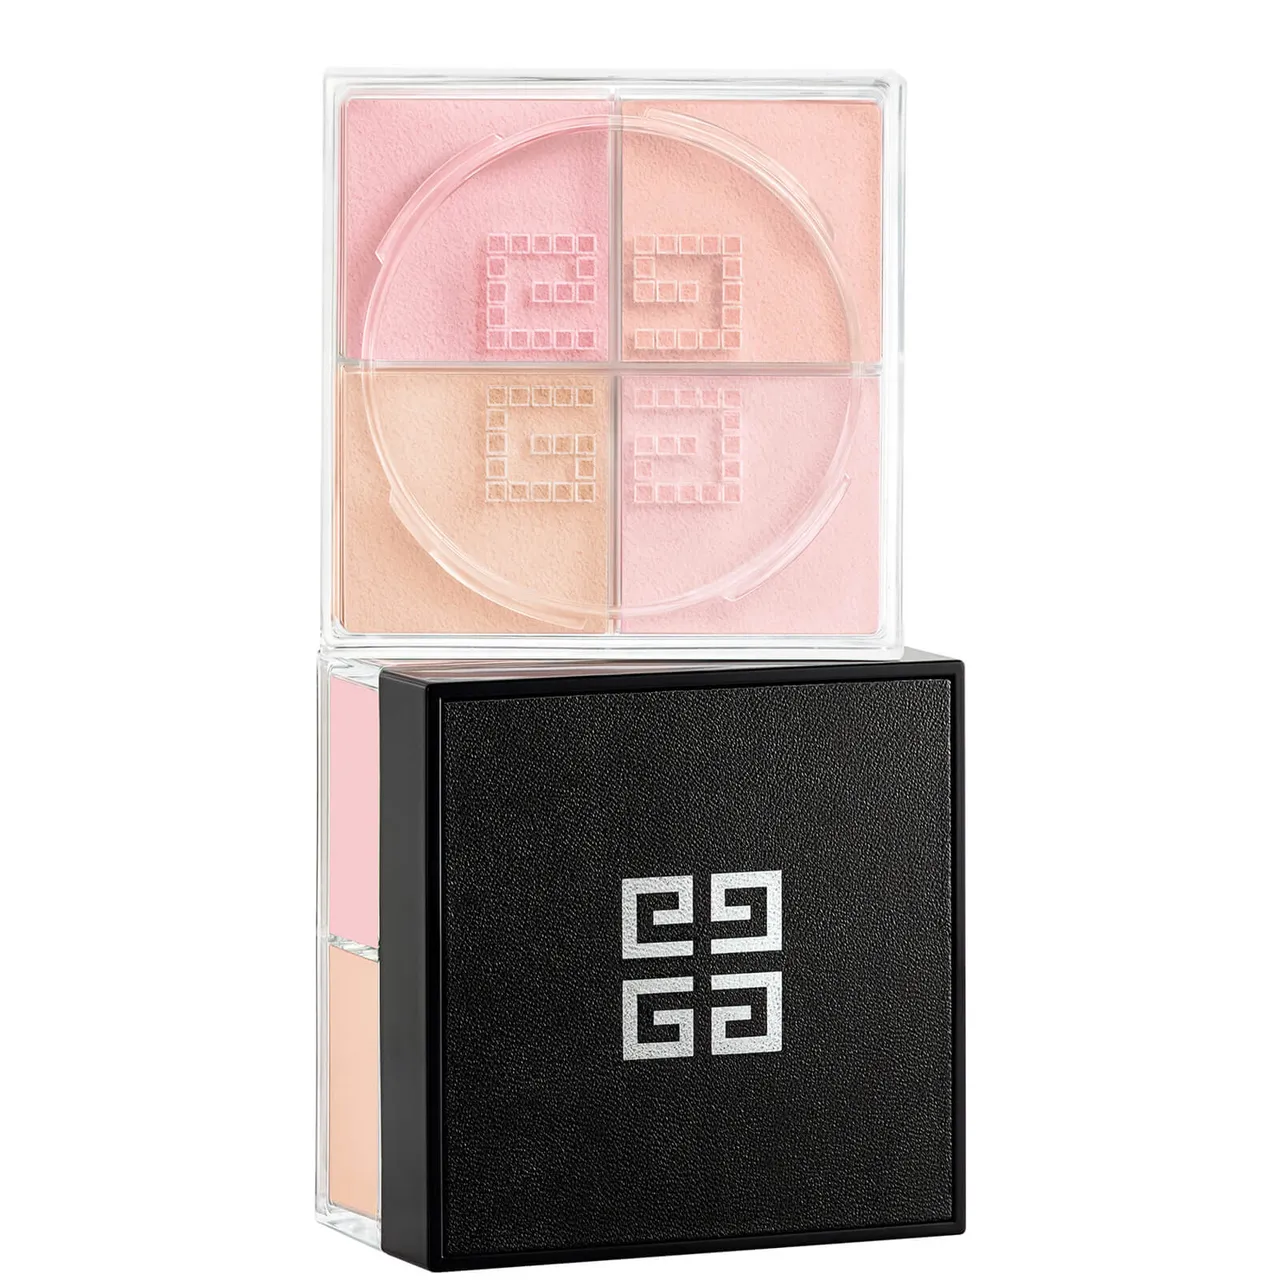 Givenchy Prisme Libre Loose Powder (4 x 3g) (Various Shades) - N03 Voile Rosé